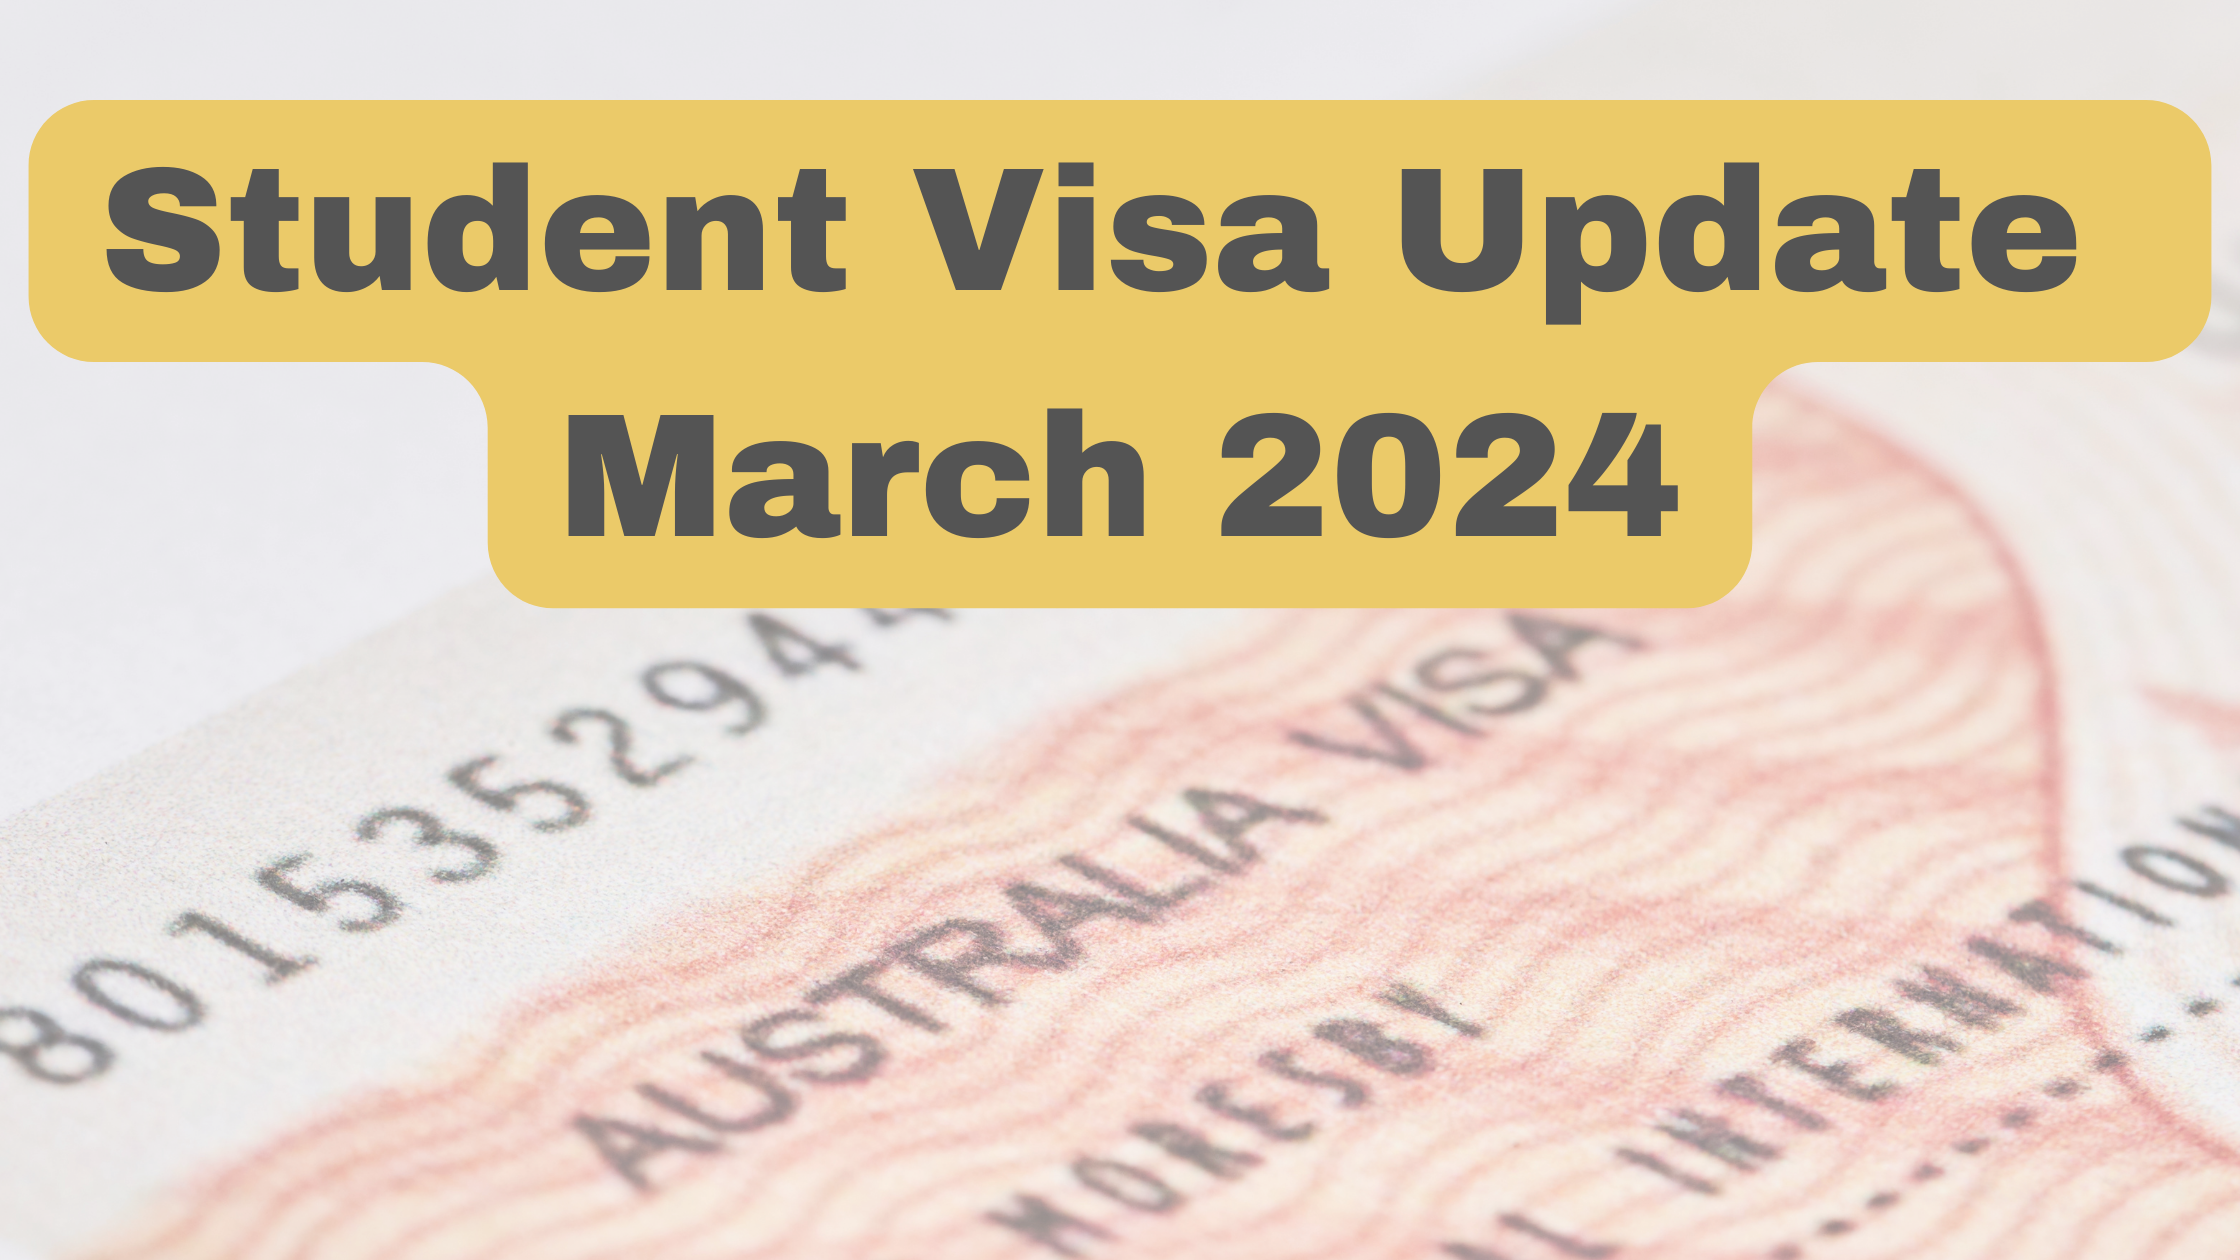 Student Visa Update in March 2024